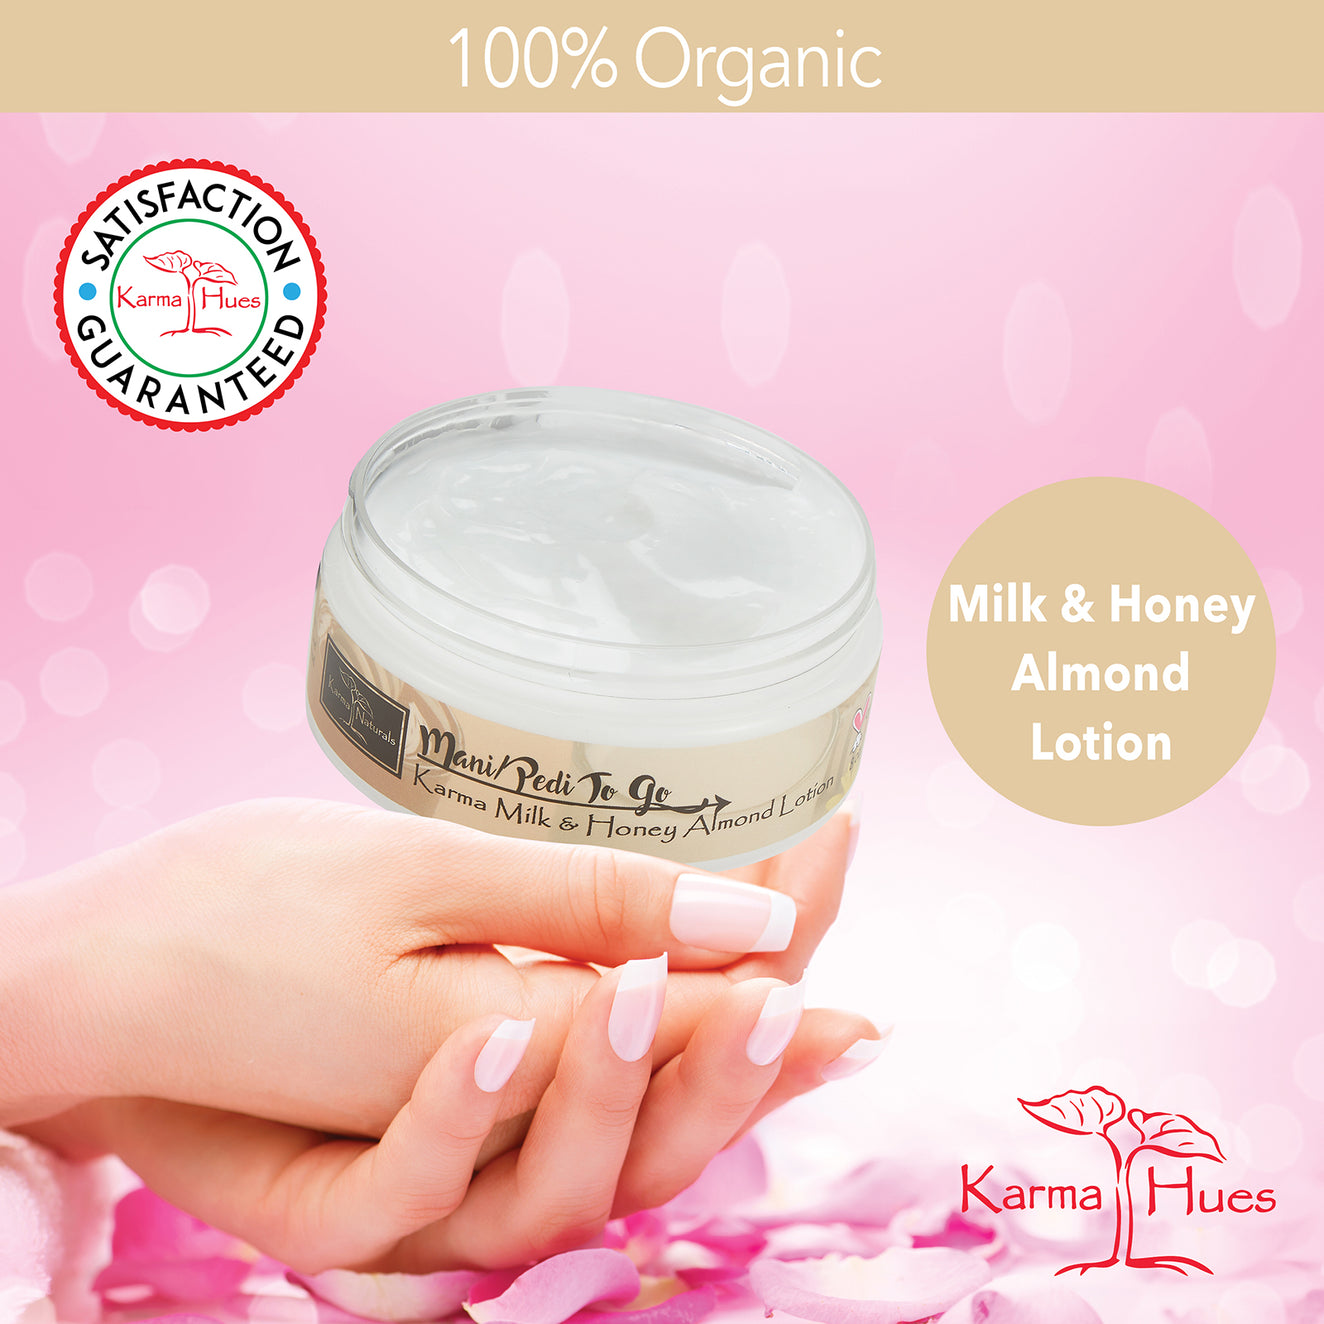 Karma Naturals Milk and Honey Almond Lotion